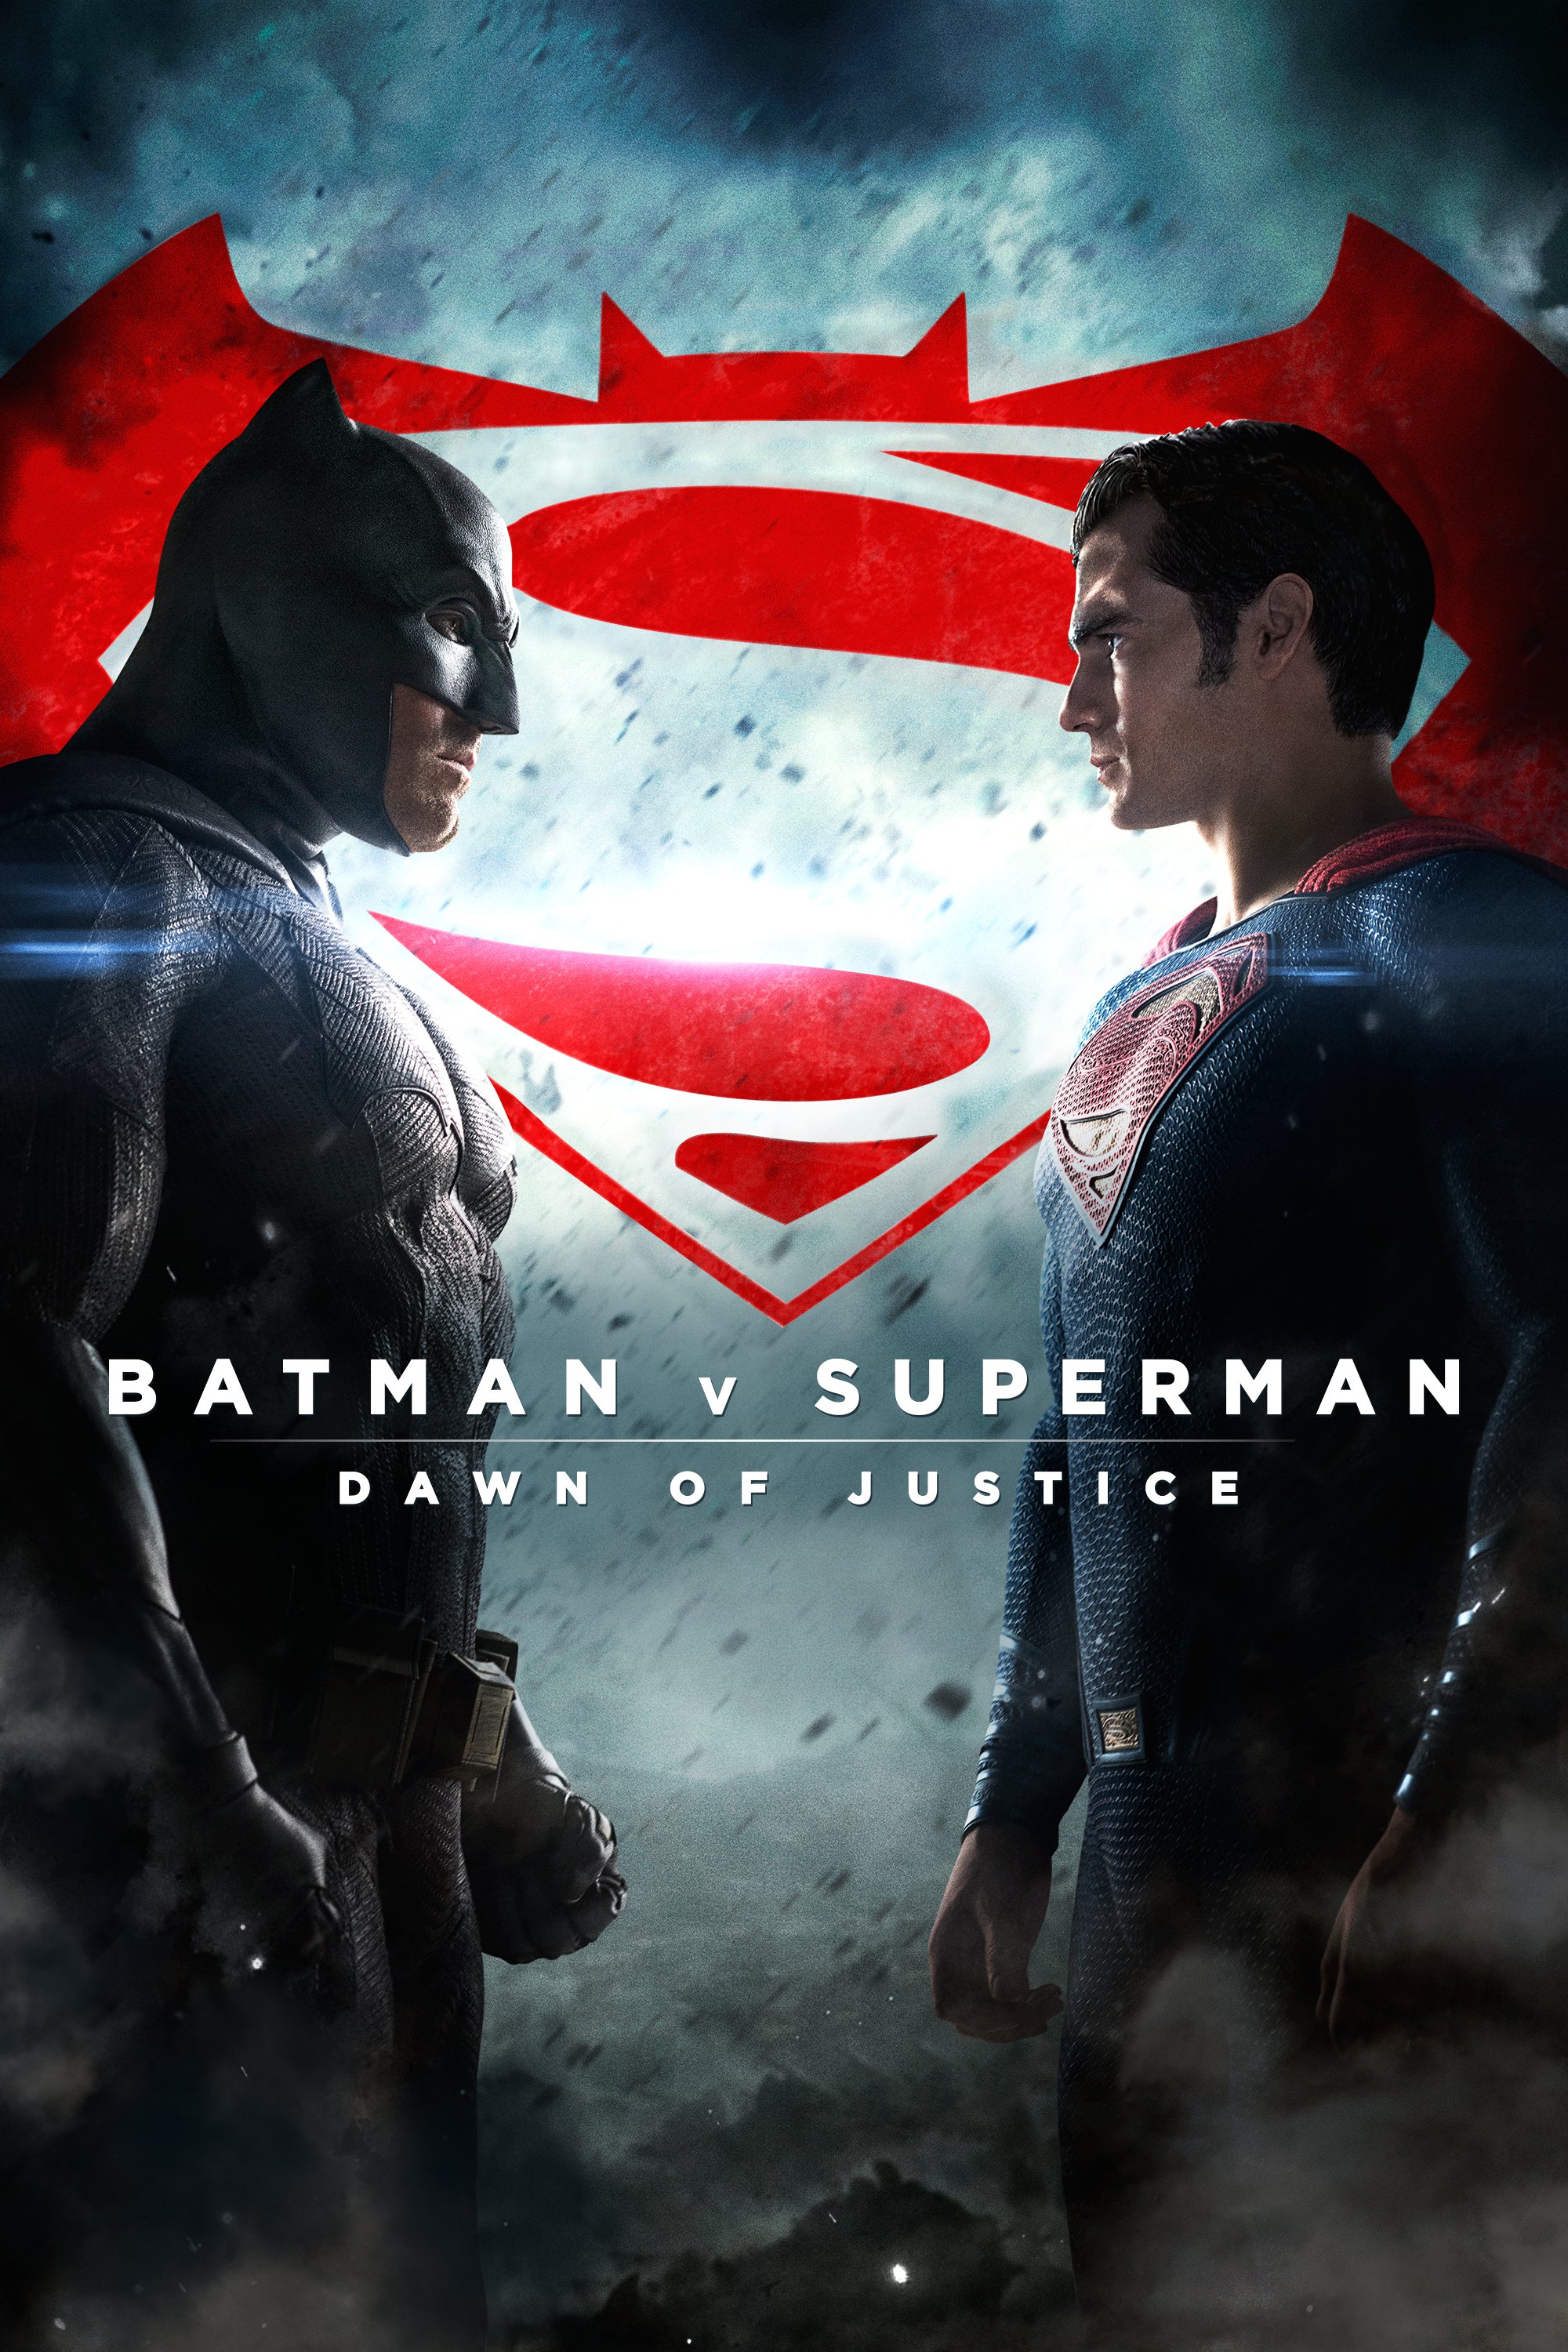 Plakat von "Batman v Superman: Dawn of Justice"